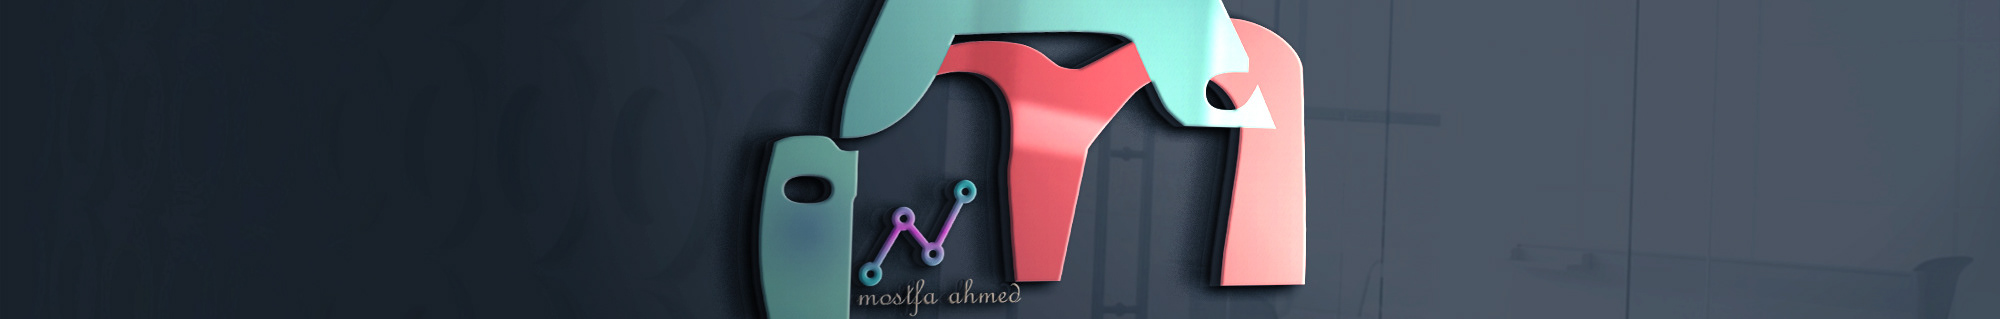 Profielbanner van Mostfa AhMed